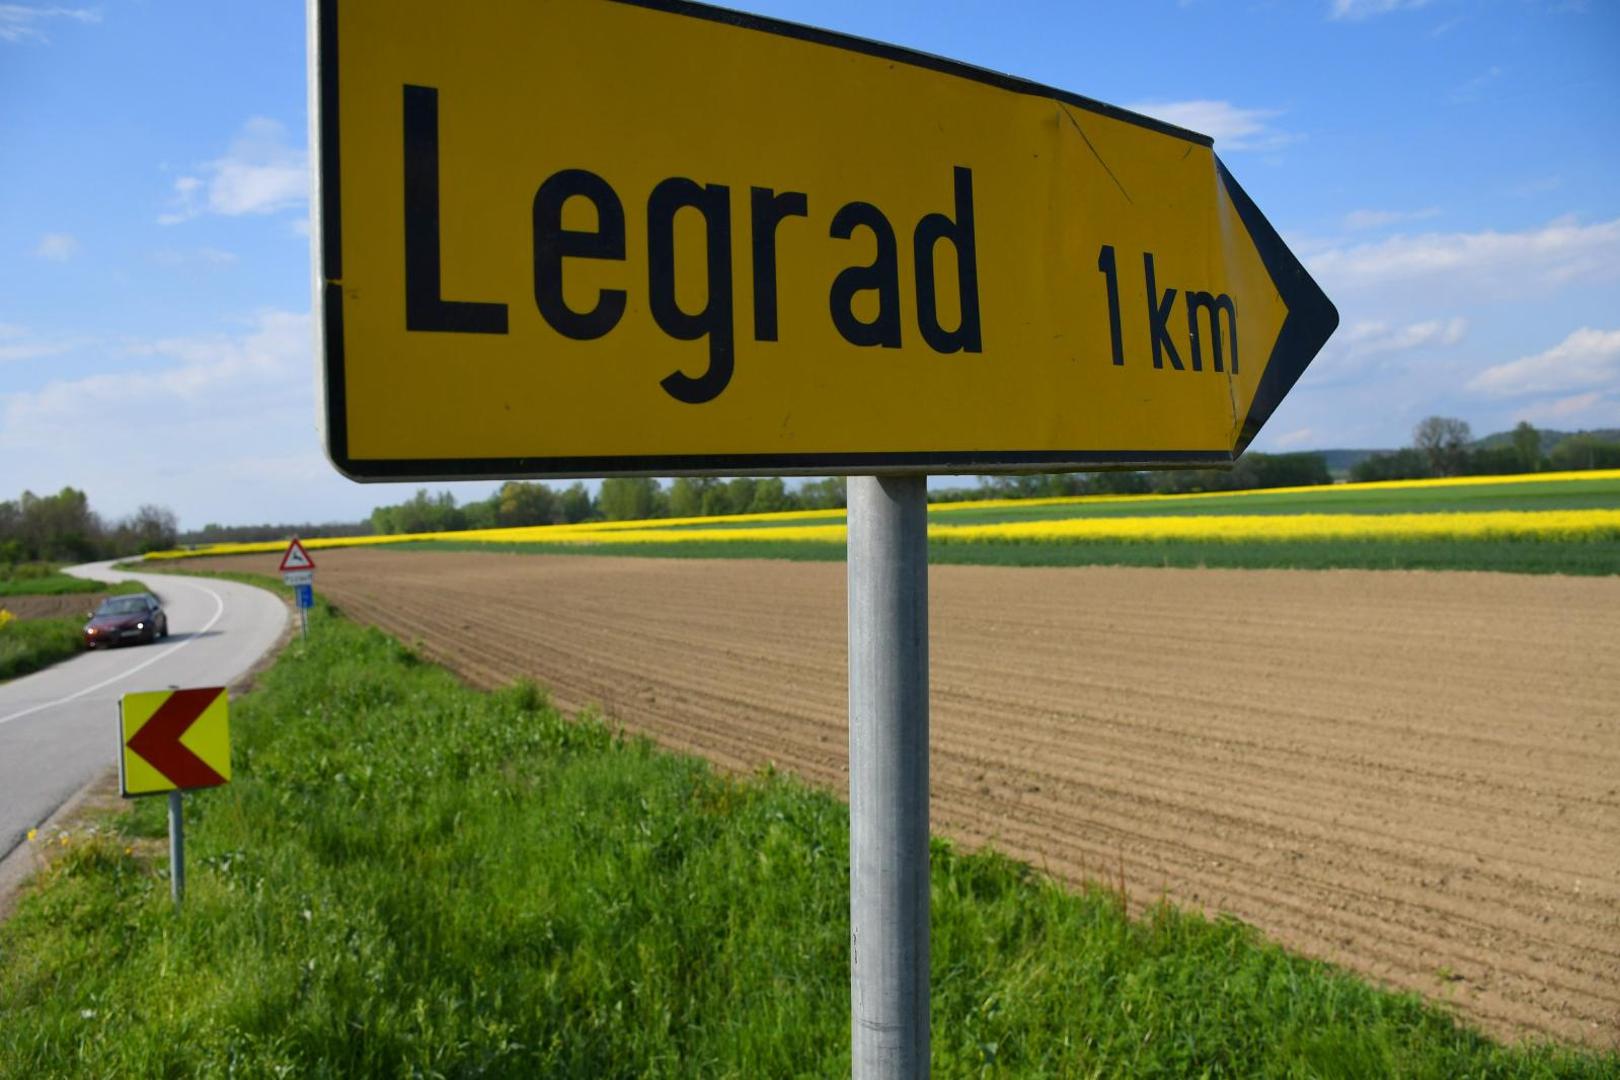 03.05.2021., Legrad - Turisticka patrola Vecernjeg lista. Legrad. 
Photo:Damir Spehar/PIXSELL